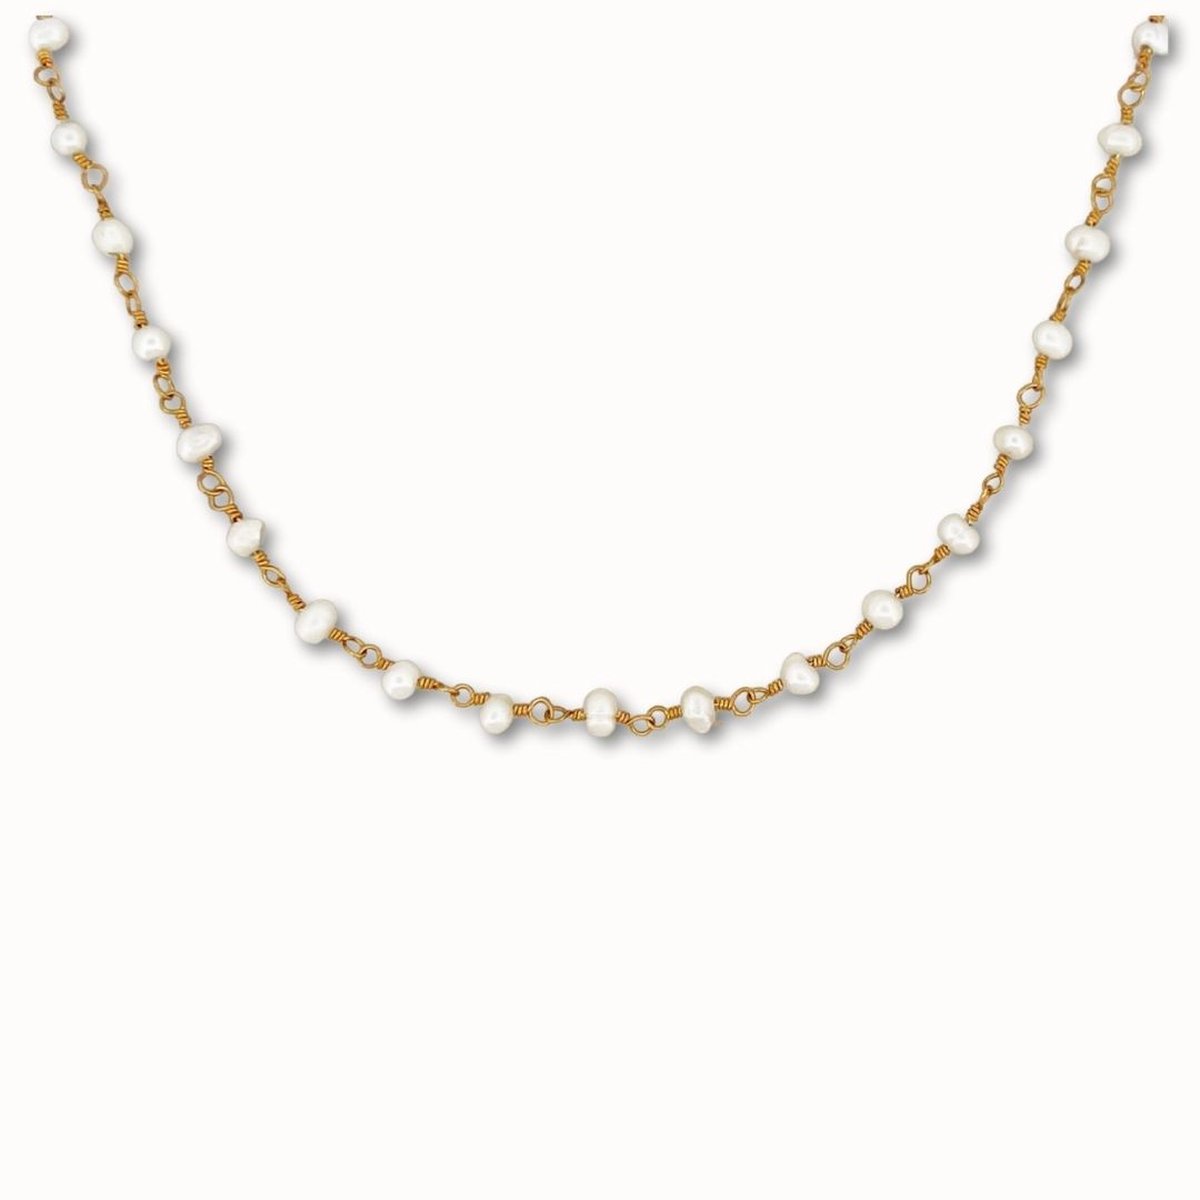 ByNouck Jewelry - Ketting Long Pearl Chain - Sieraden - Vrouwen Ketting - Parels - Verguld - Halsketting